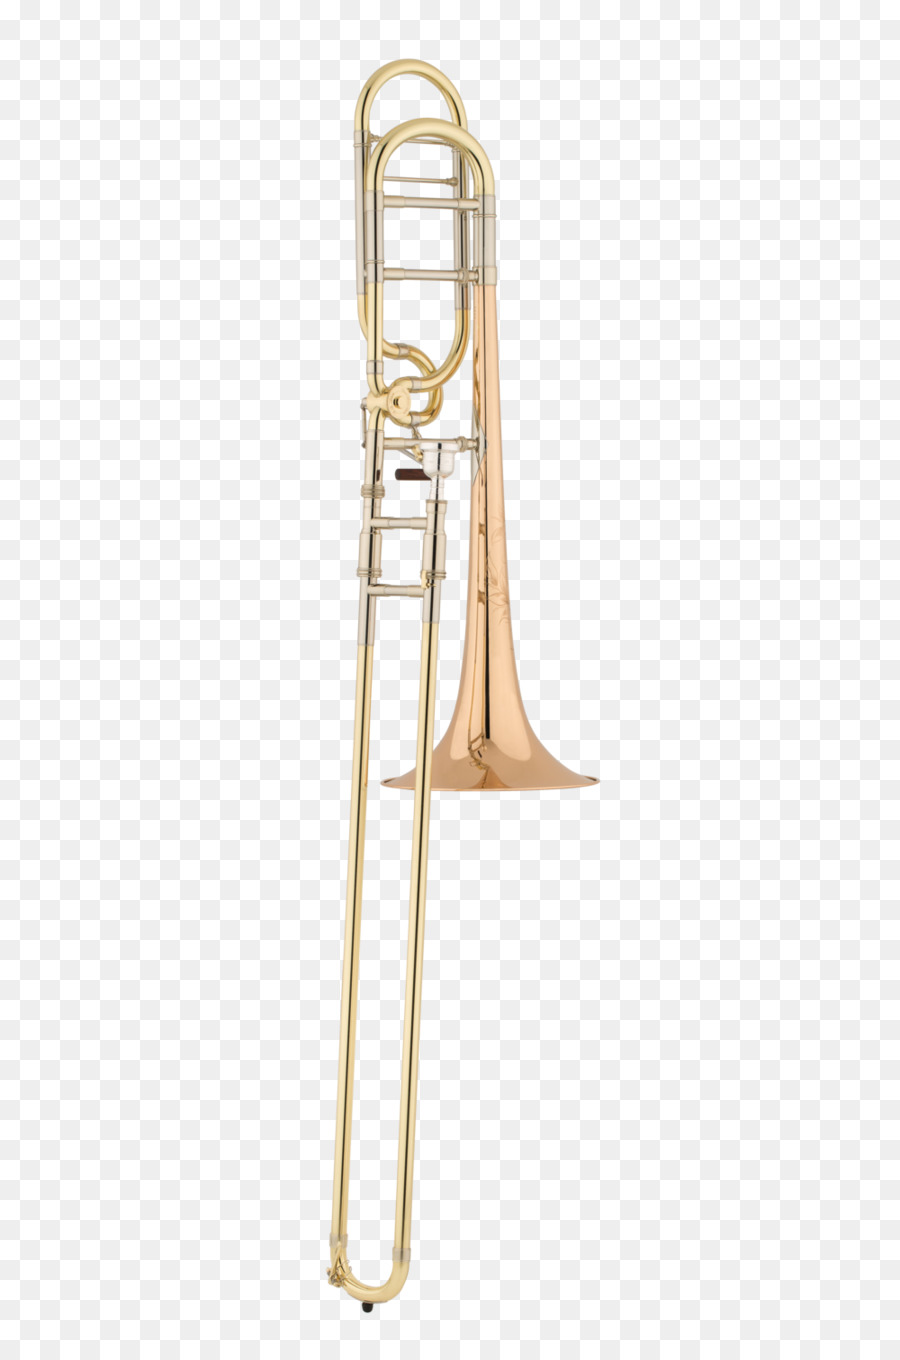 Types of trombone Trumpet Flugelhorn Mellophone - trombone png download - 1000*1500 - Free Transparent Types Of Trombone png Download.